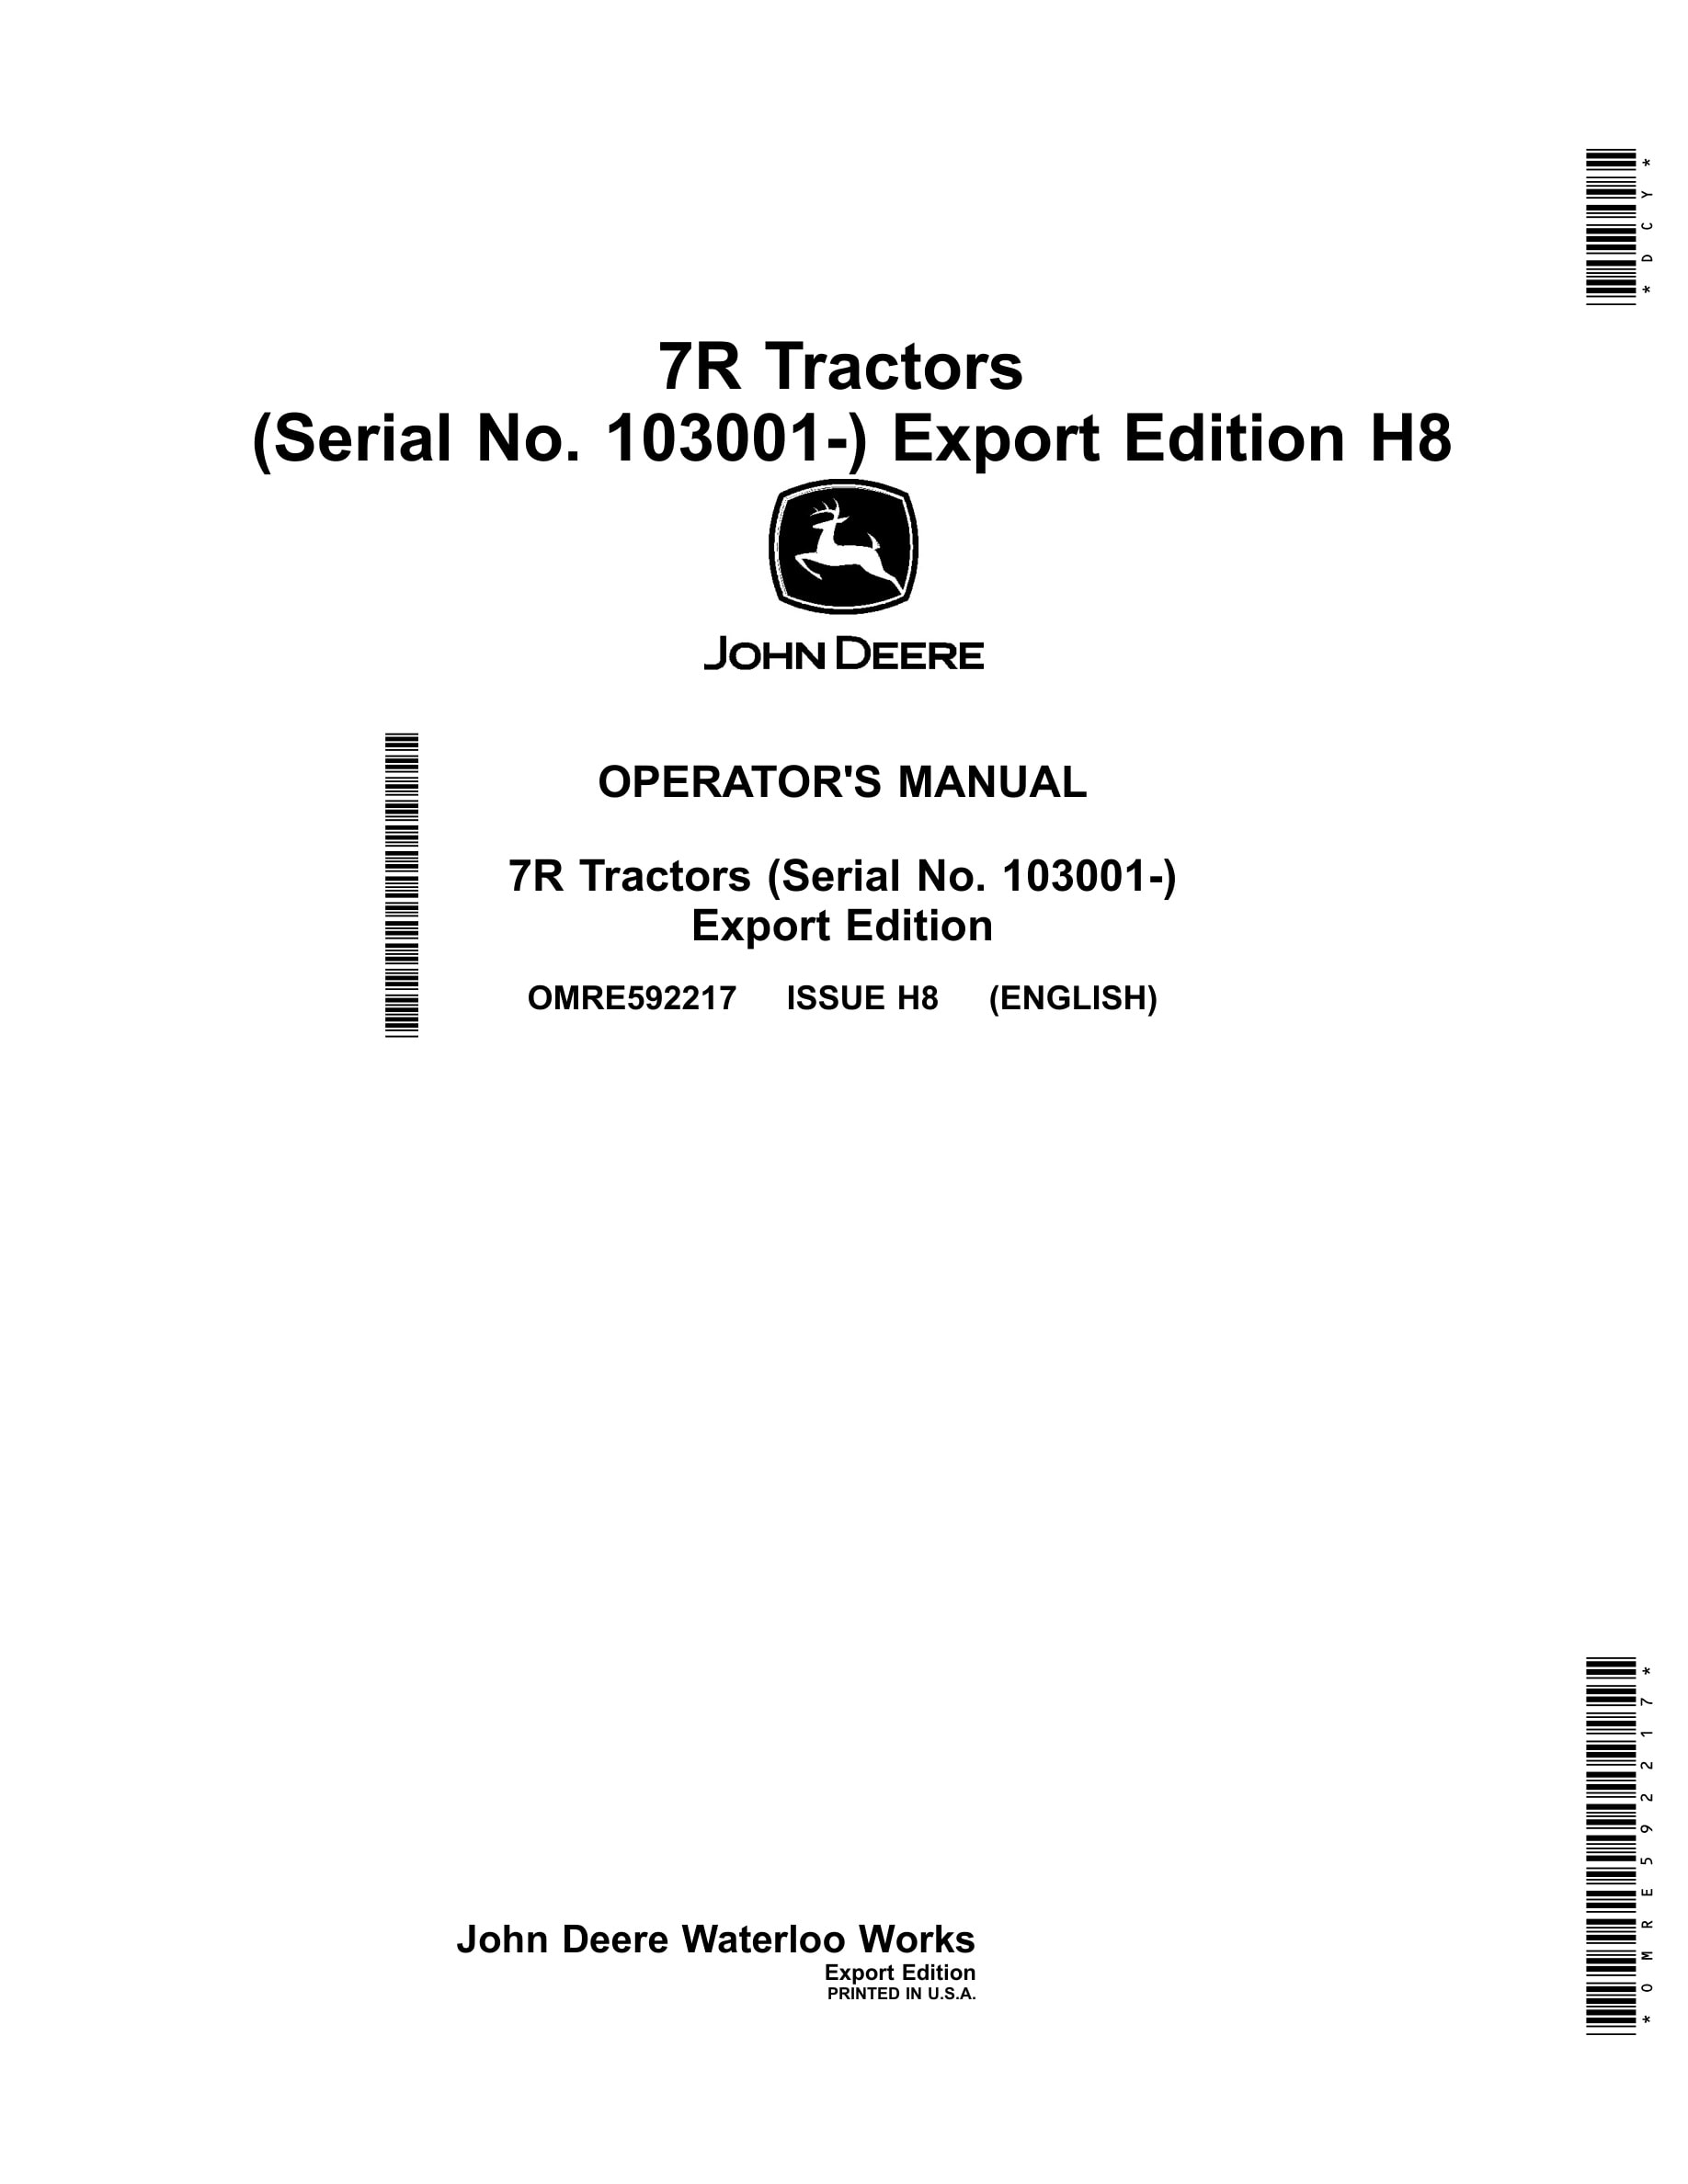 John Deere 7r Tractors Operator Manuals OMRE592217-1